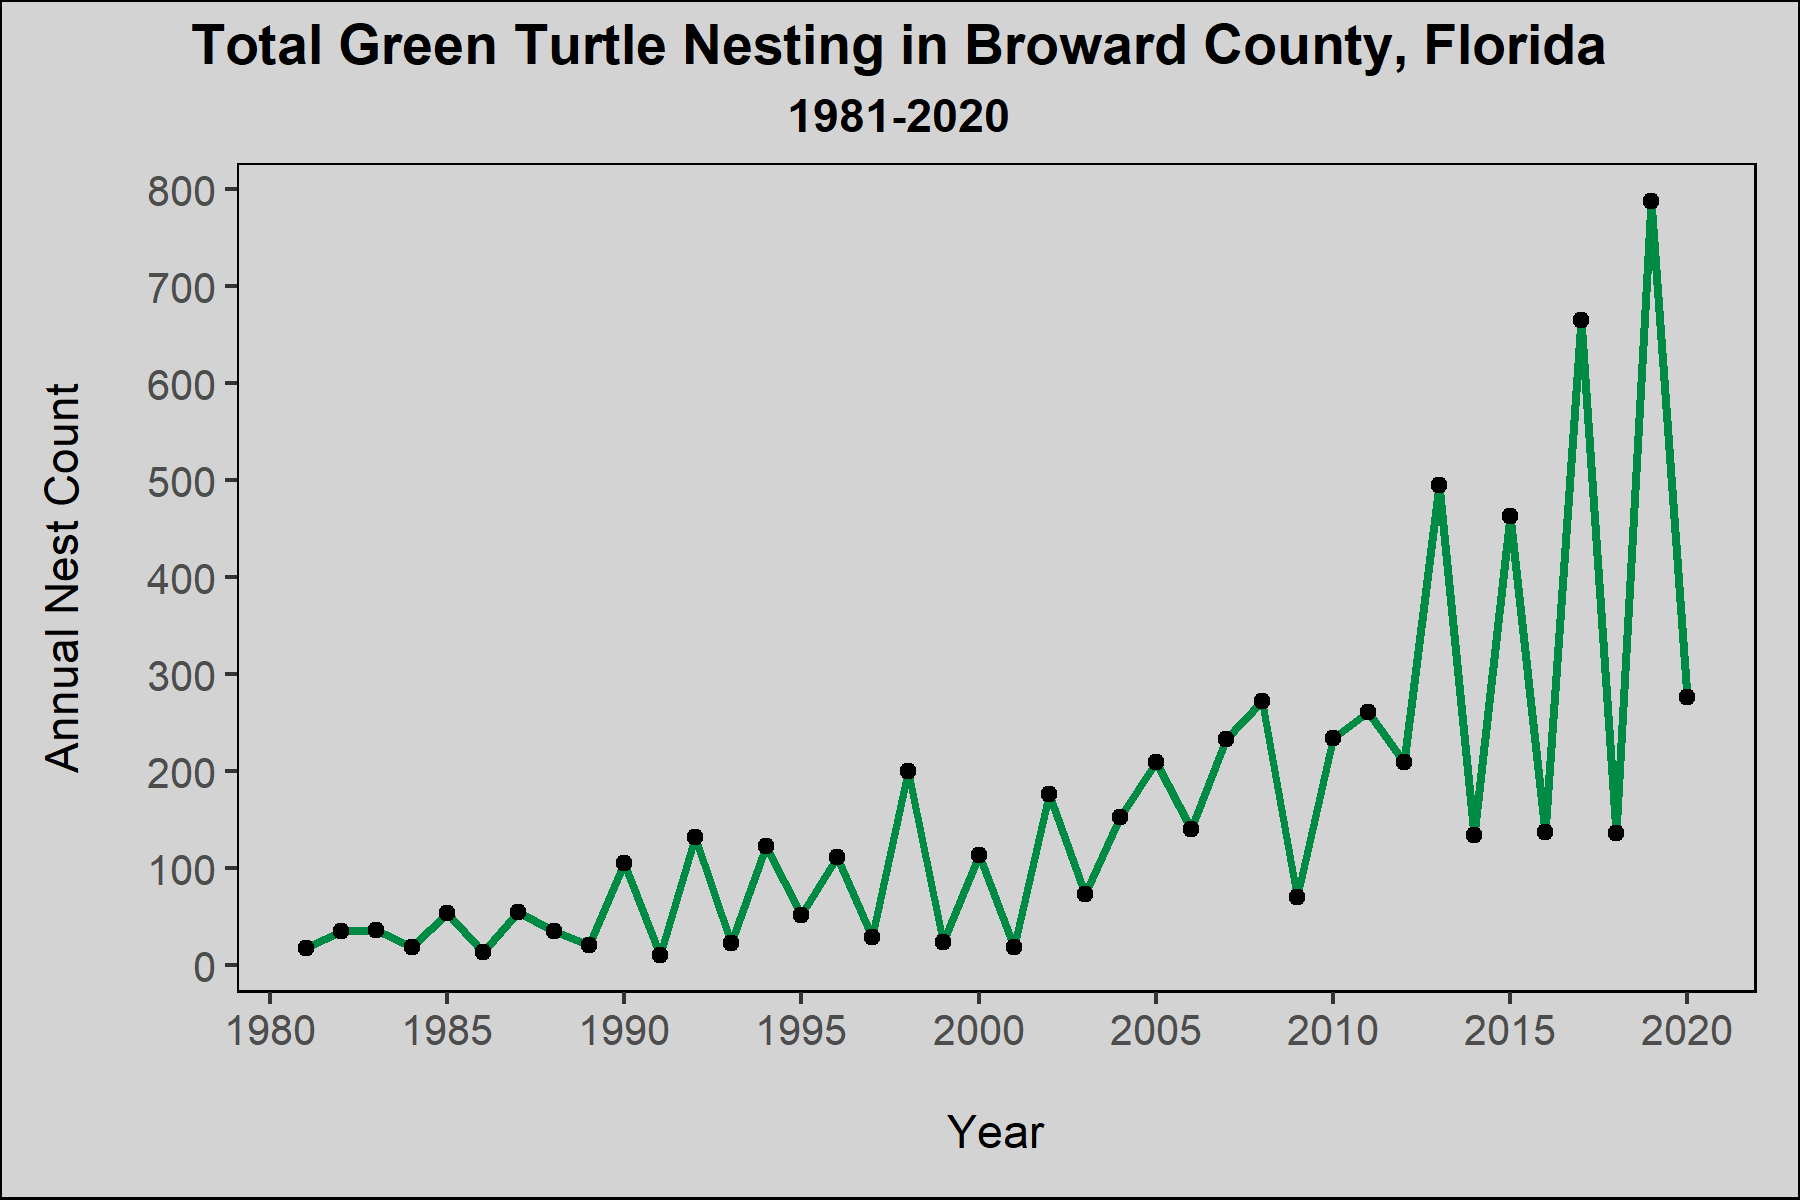 Historic Green Turtle Nesting Trends